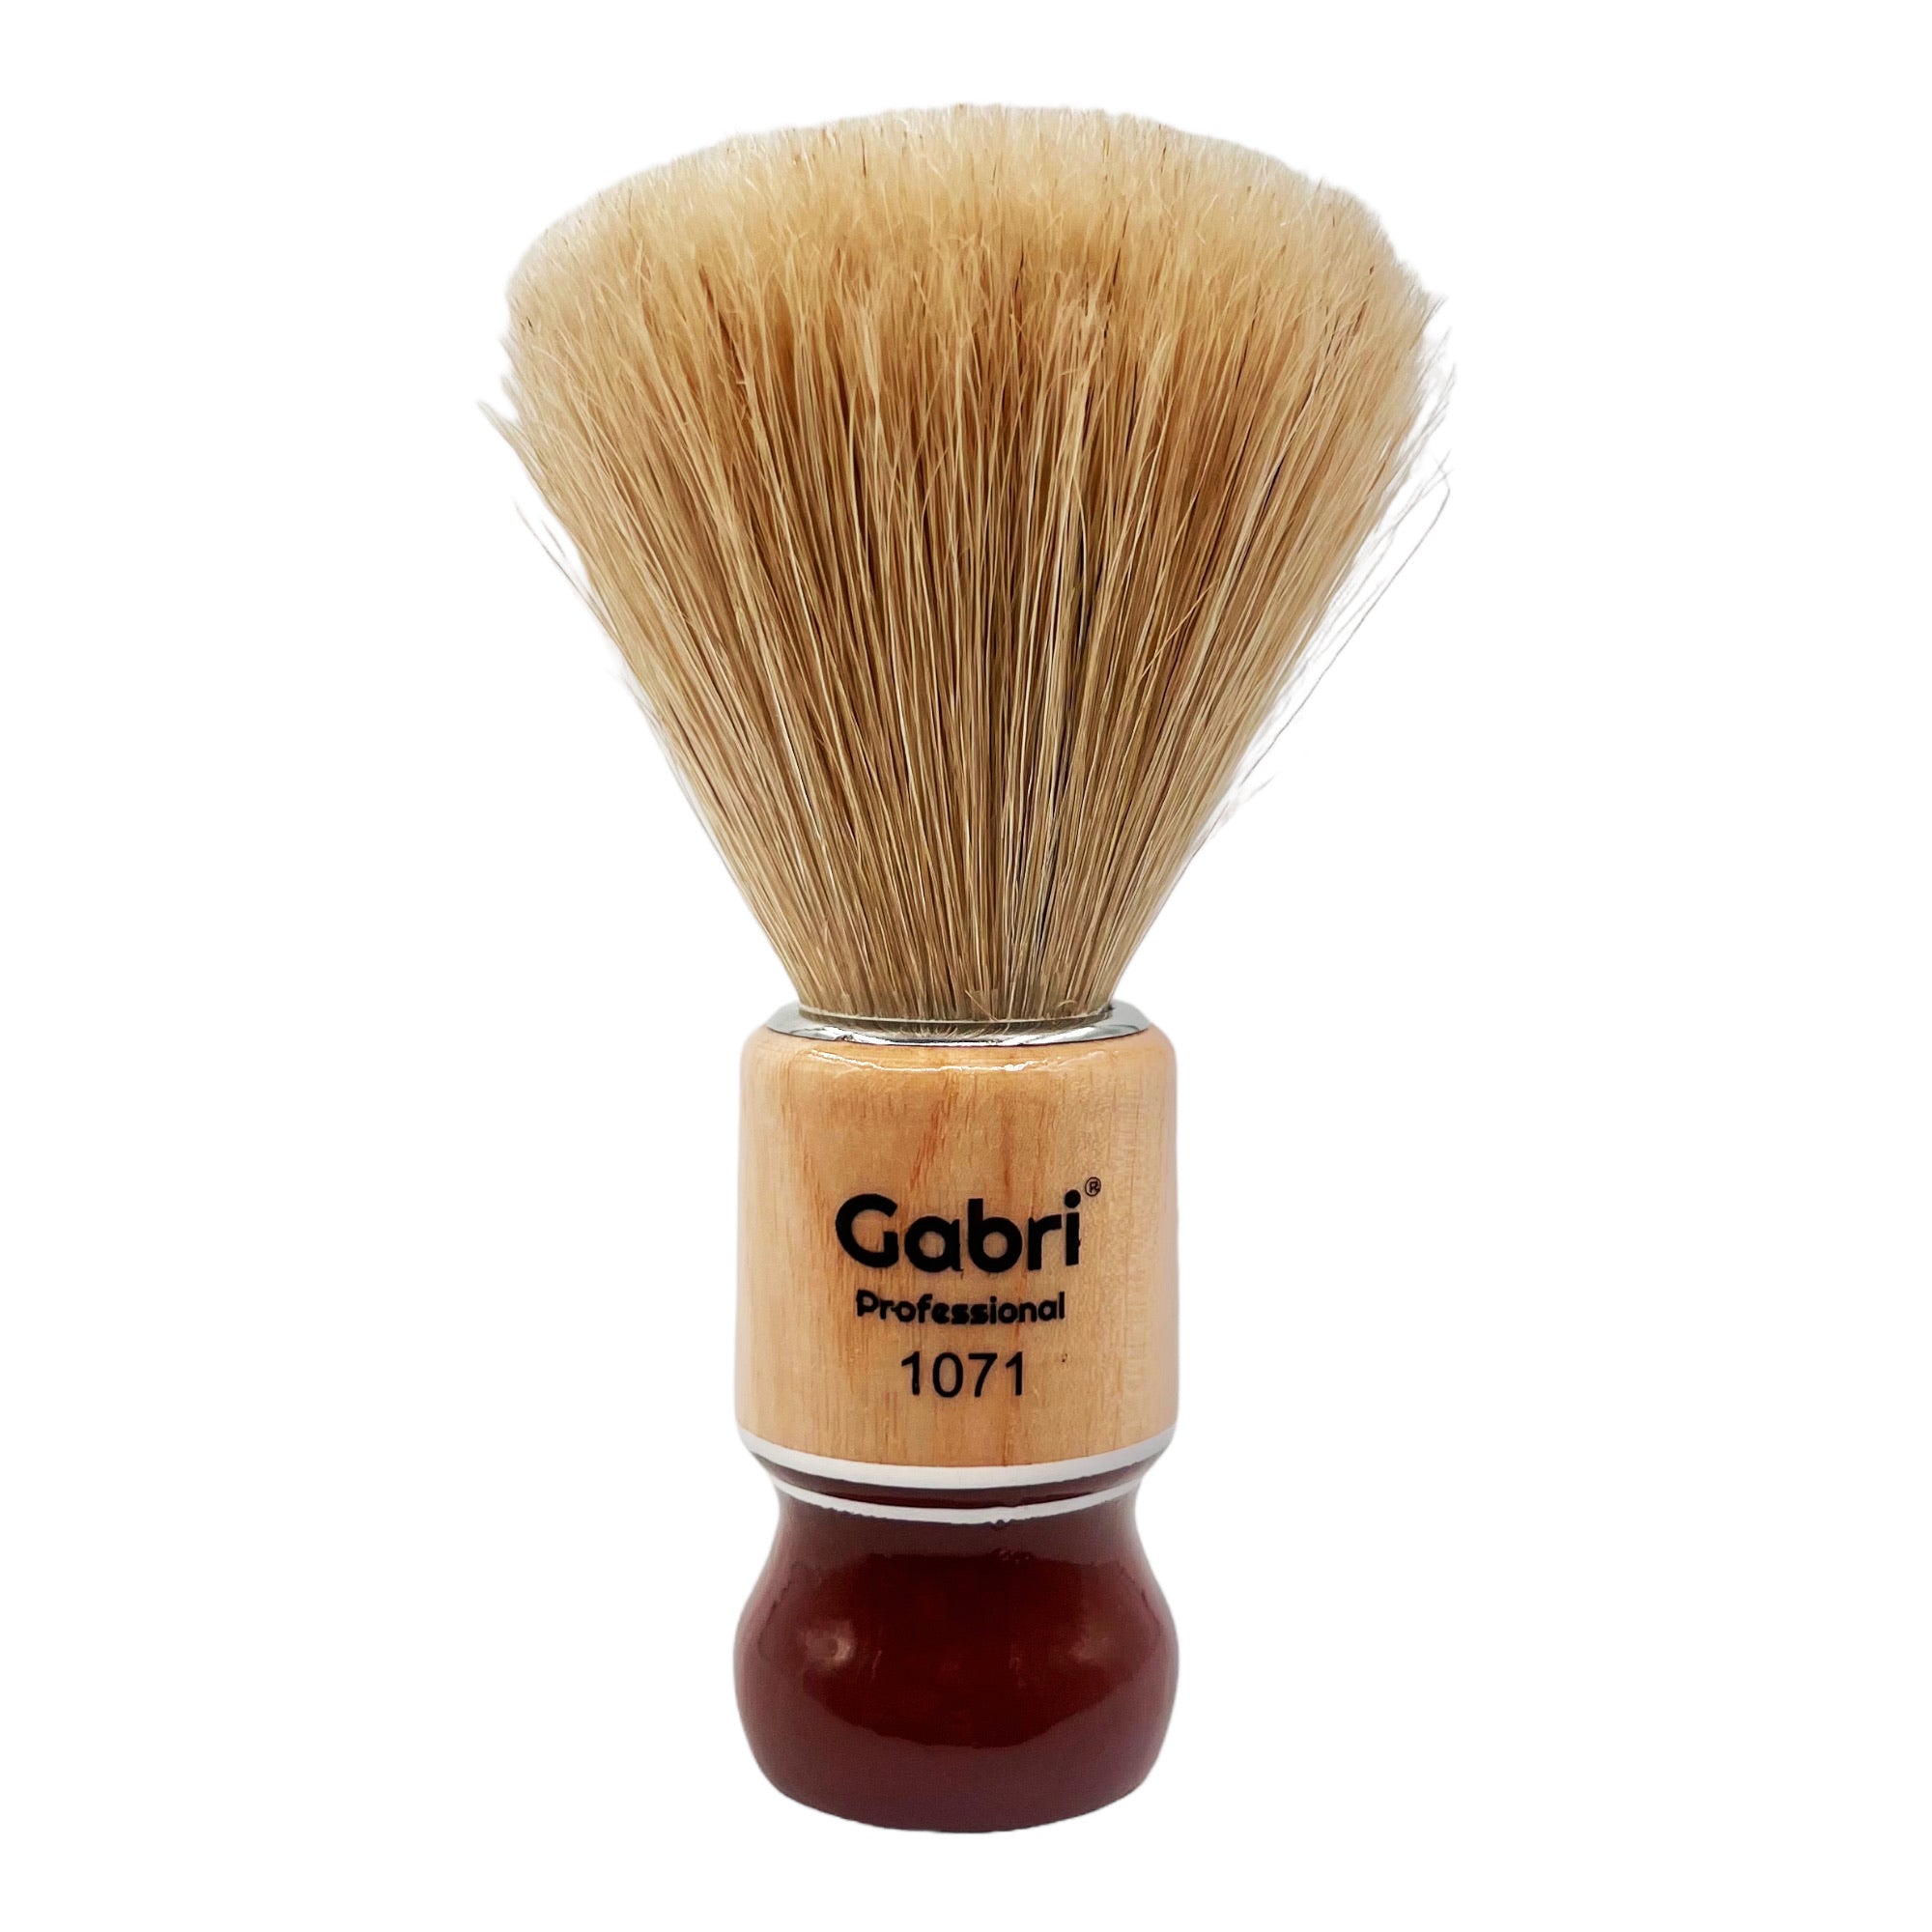 Gabri - Shaving Brush Authentic Wooden Hand Made 1071 13.5cm (Brown)